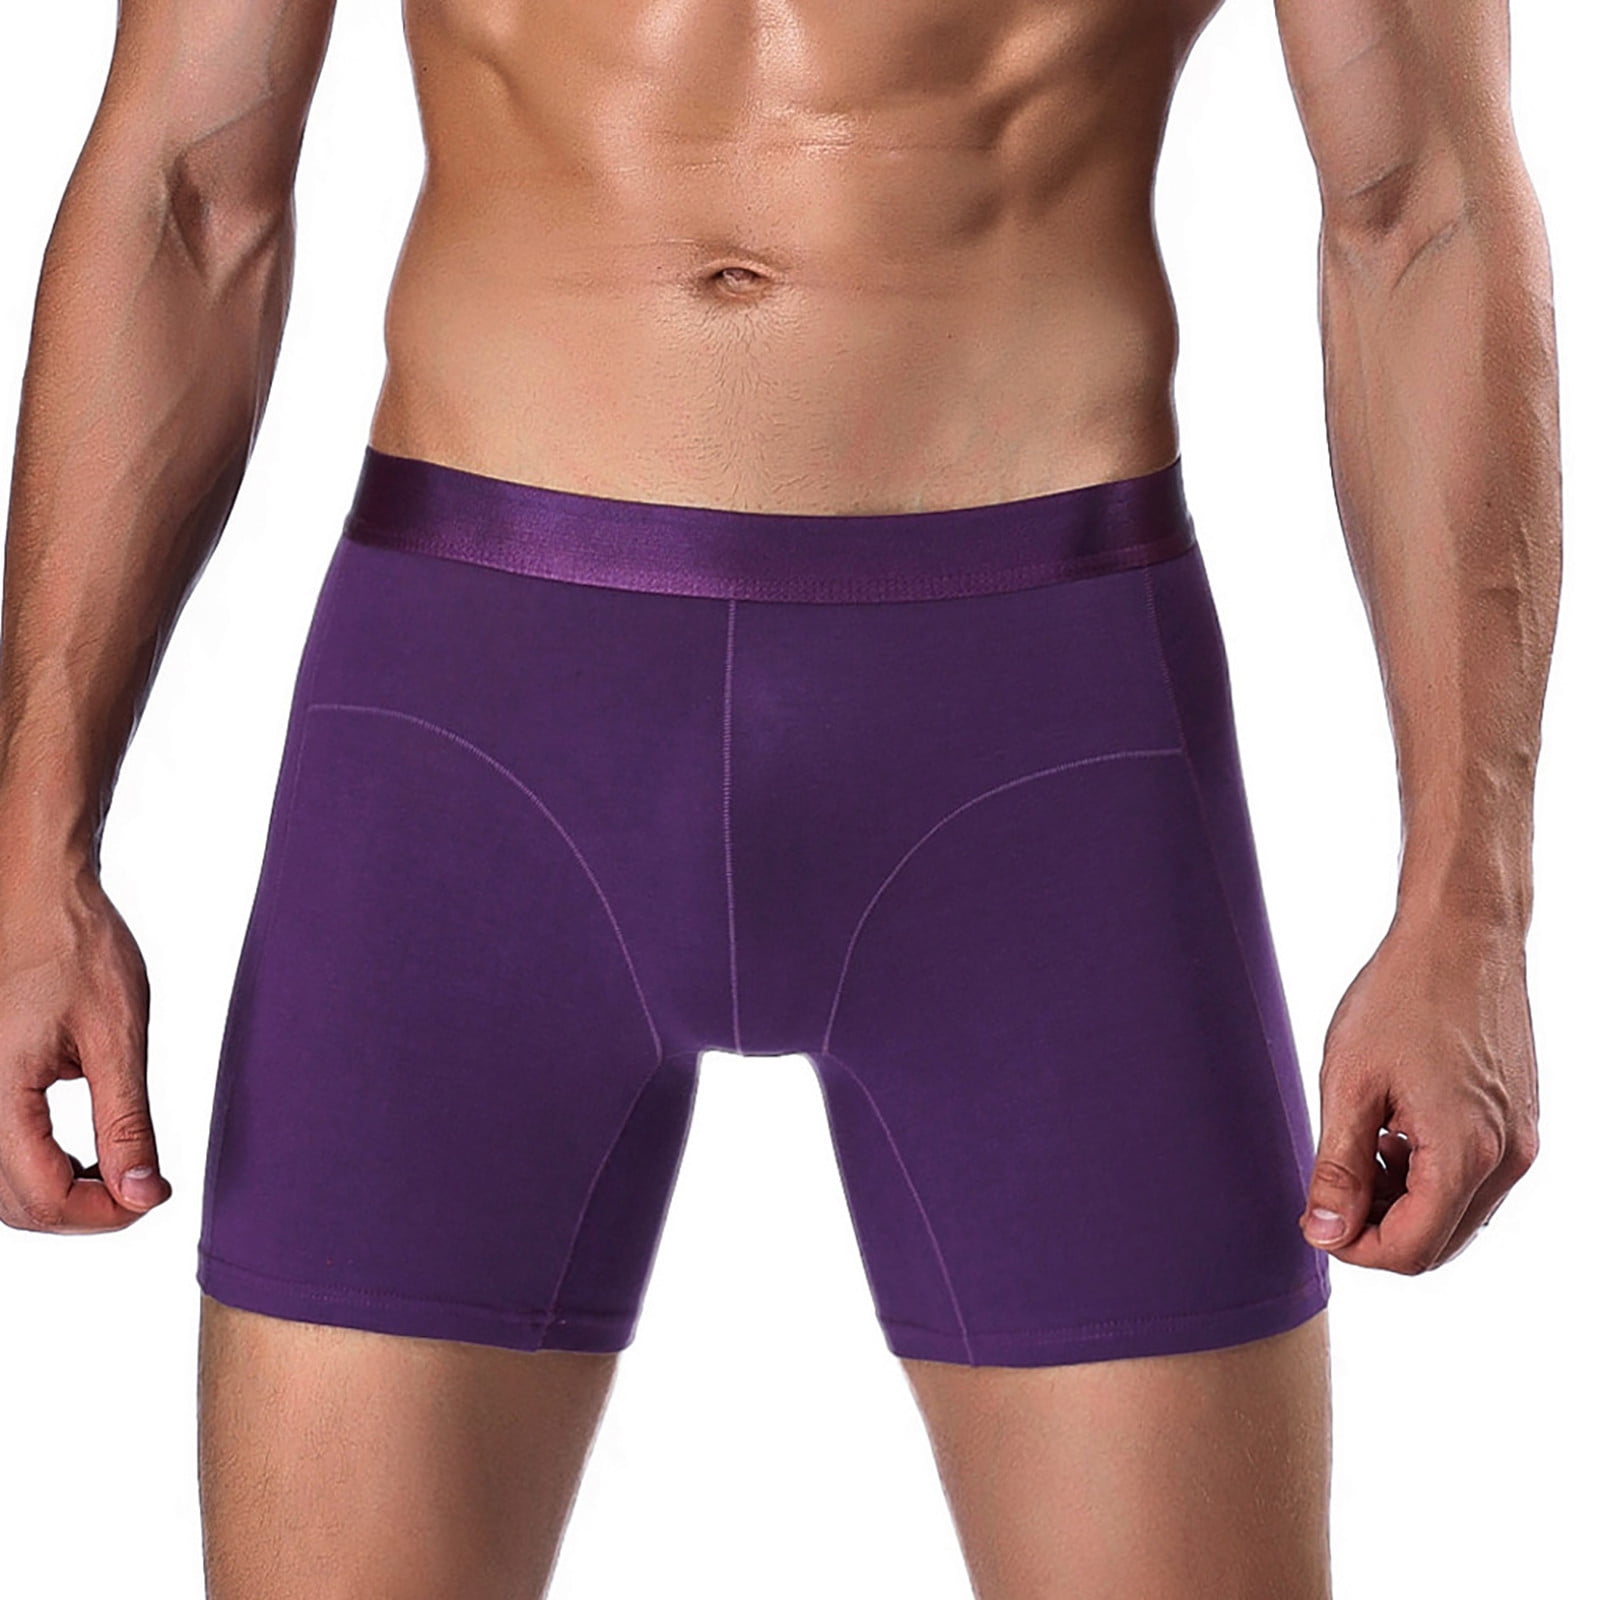 OVTICZA Boxer Briefs for Men Sexy Long Leg Anti Chafing Underwear